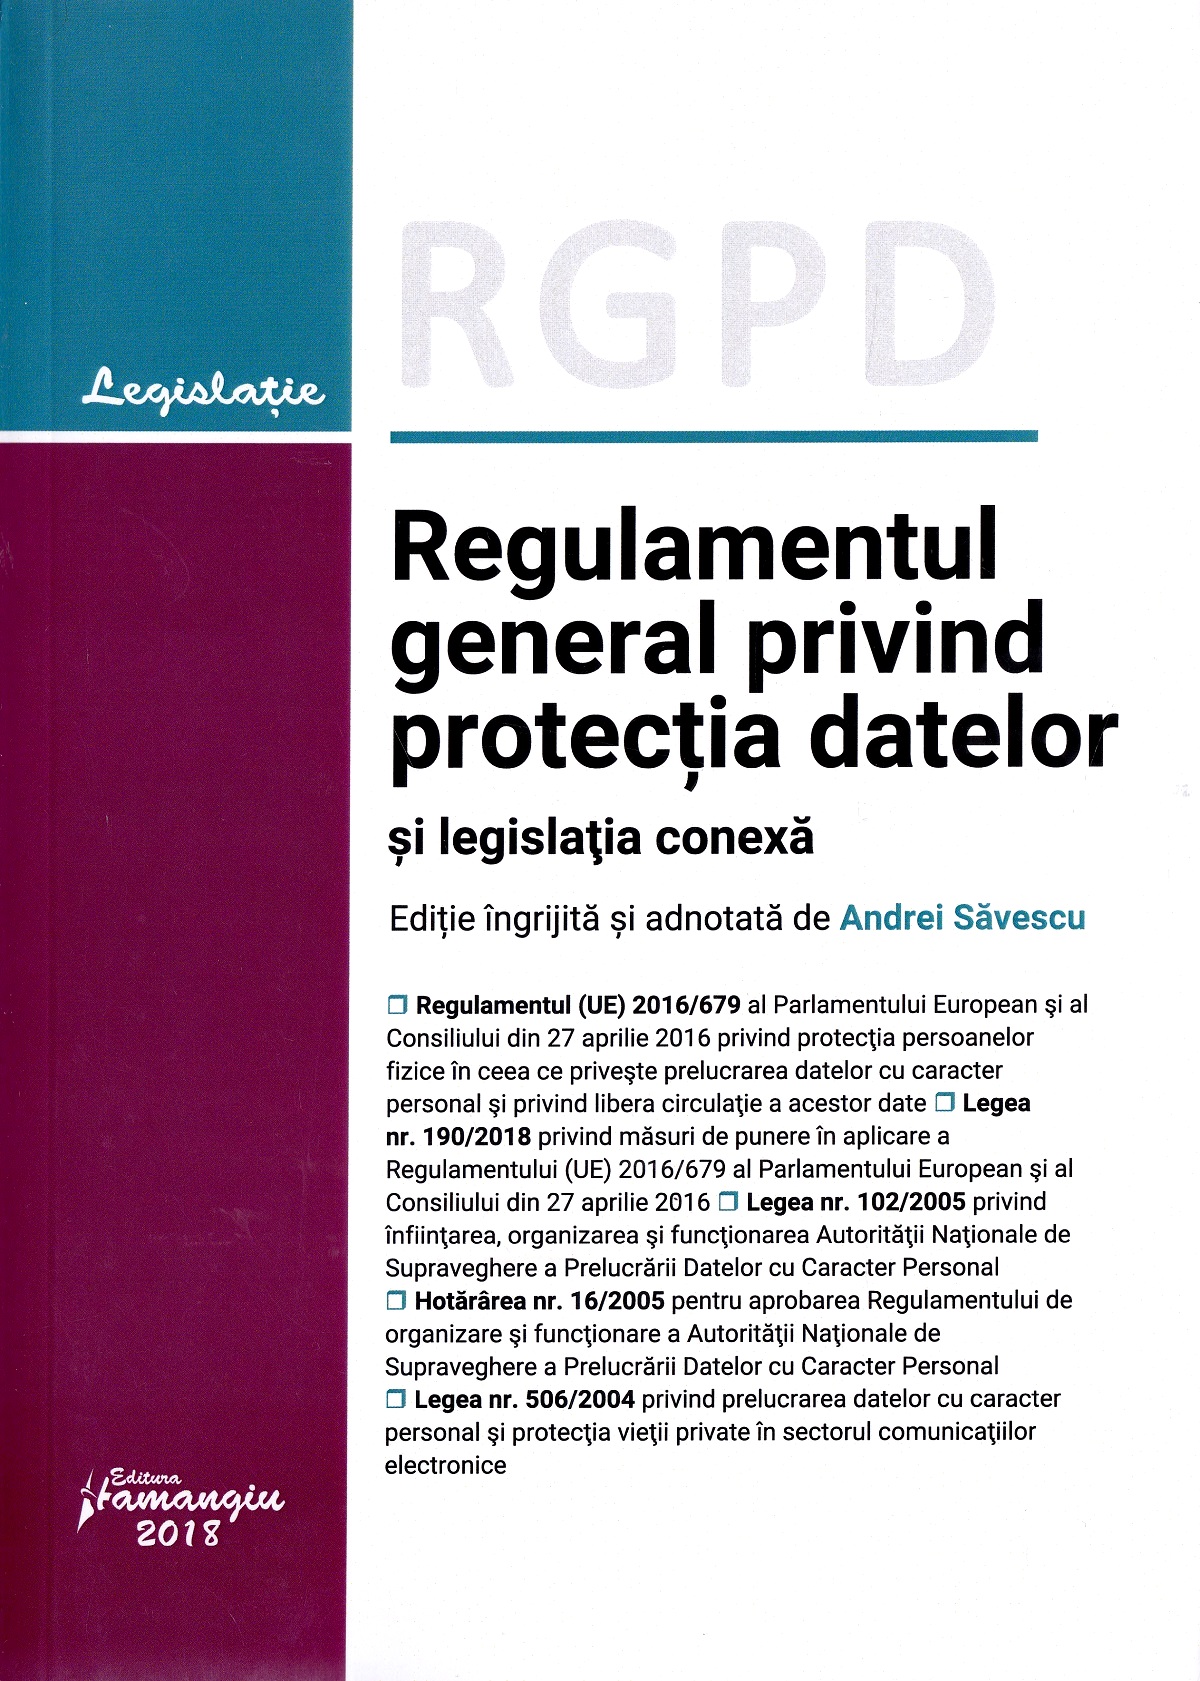 Regulamentul general privind protectia datelor si legislatia conexa